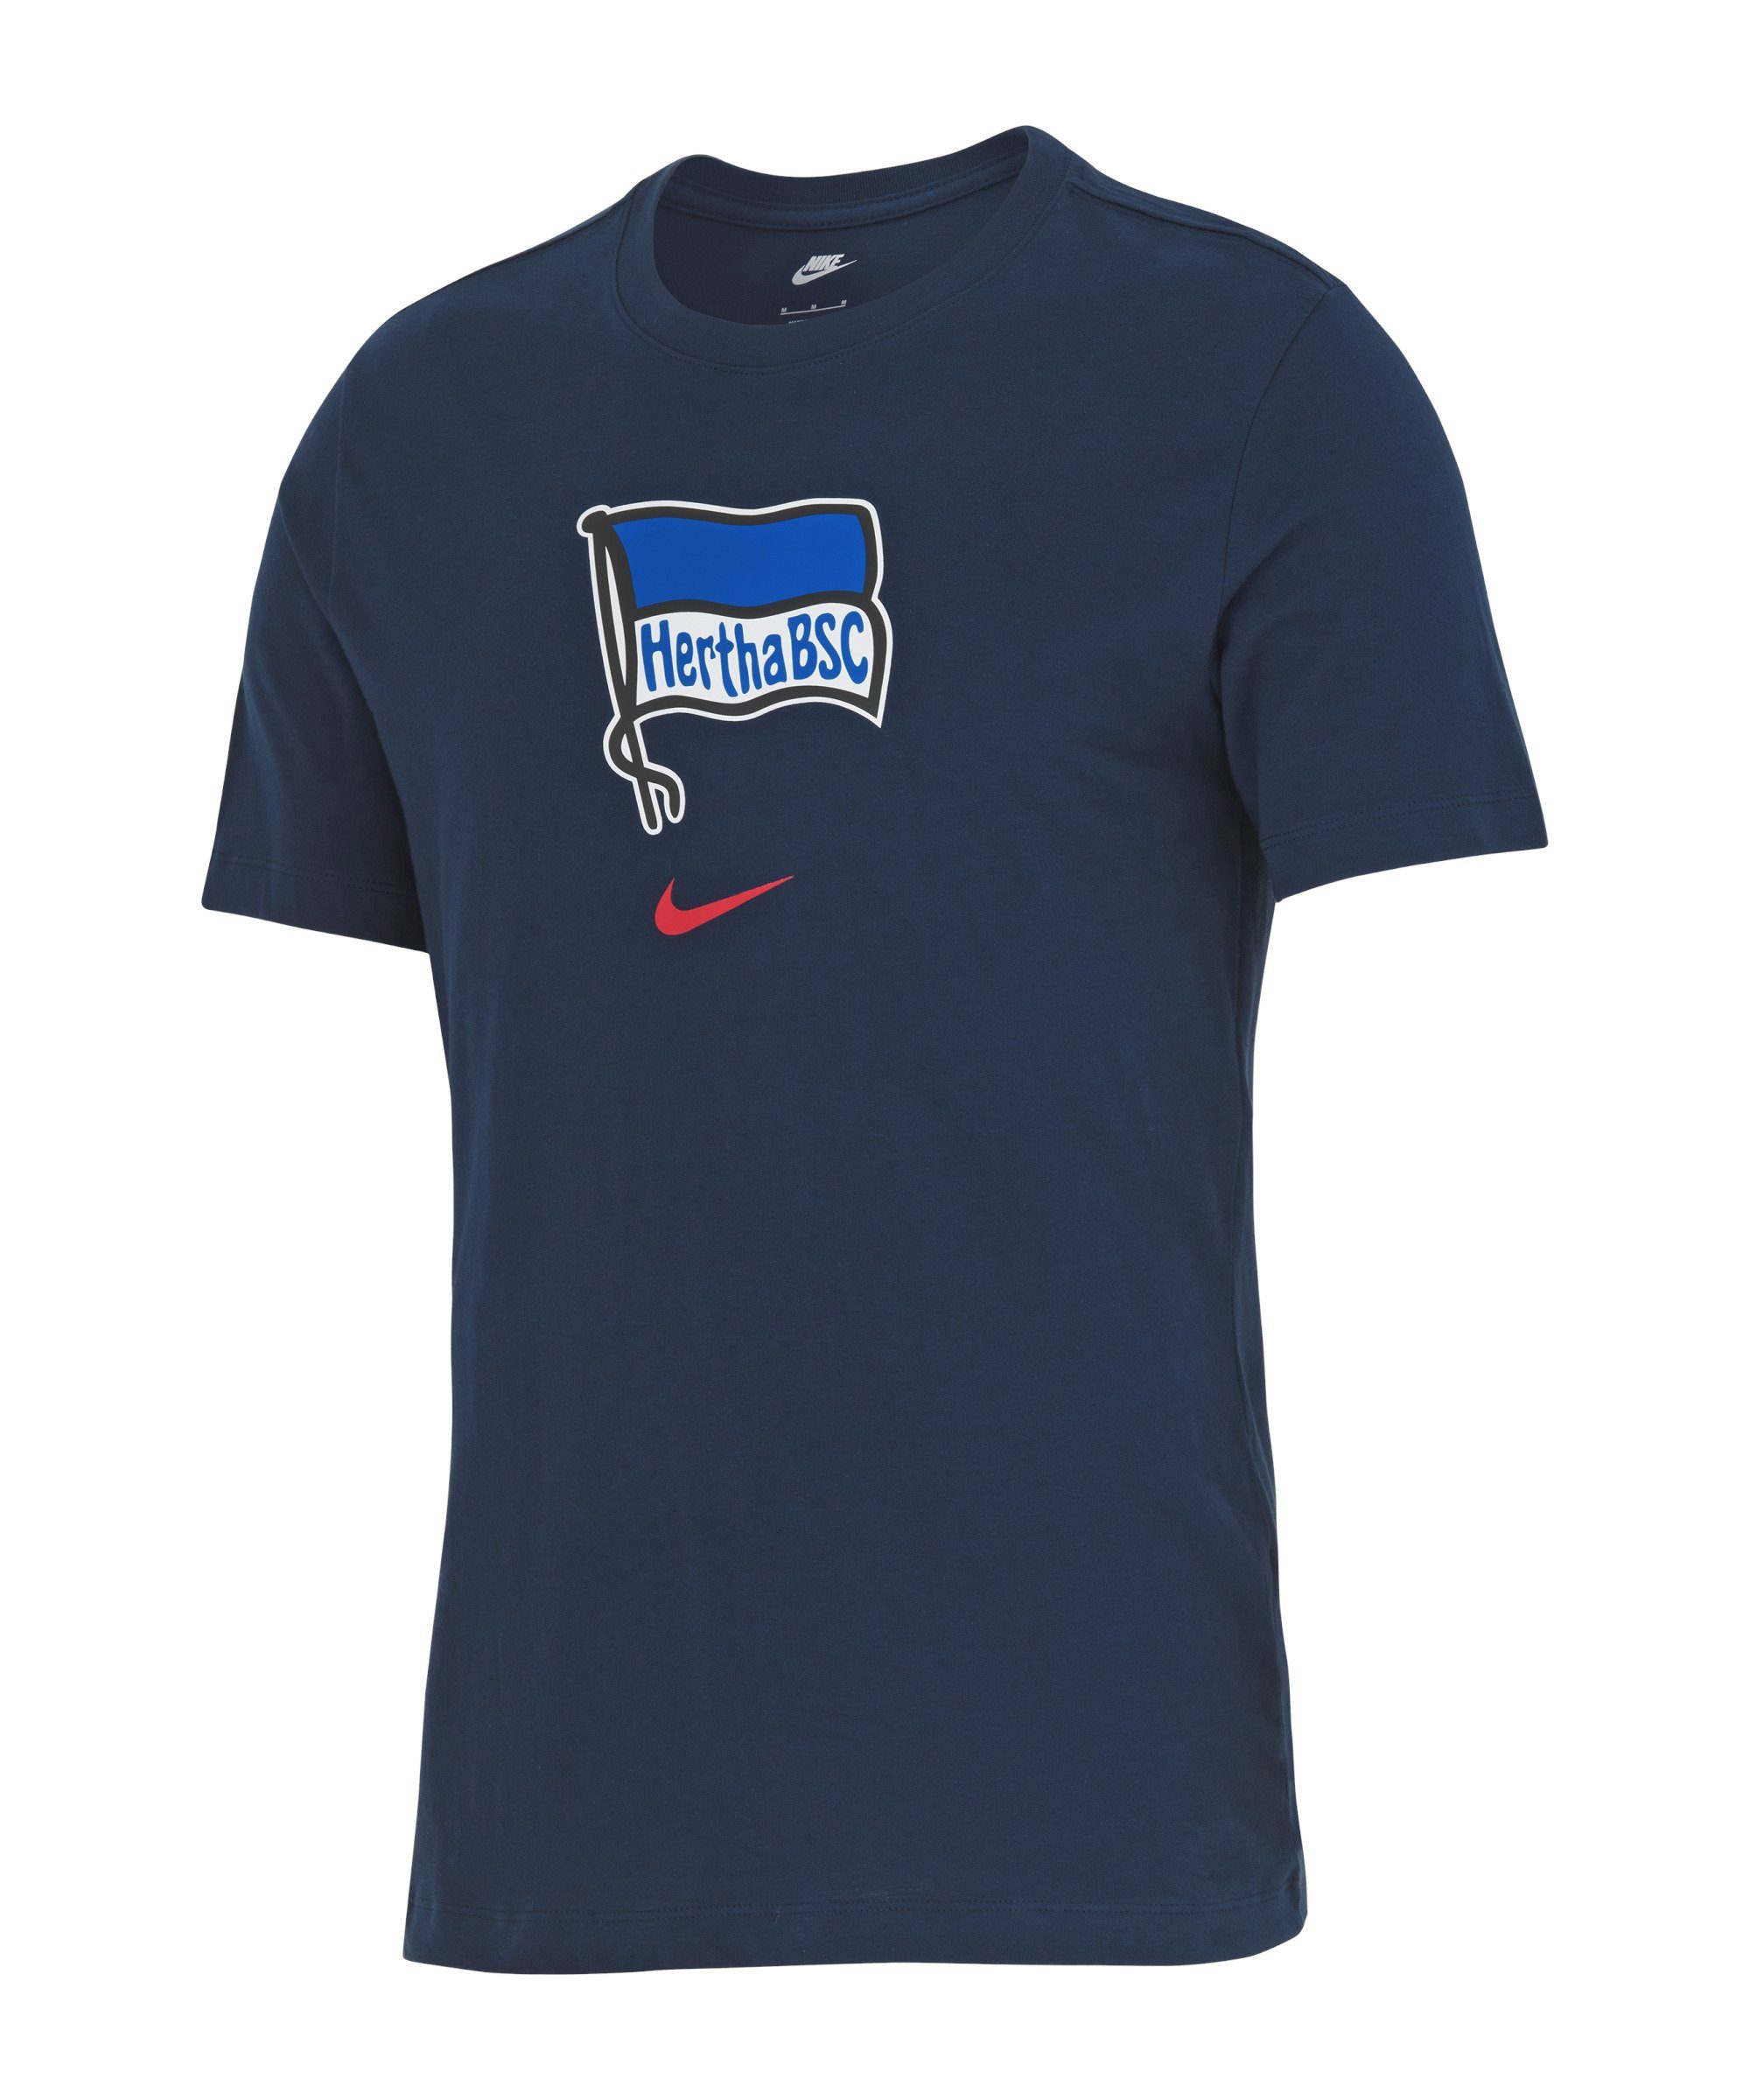 Nike T-Shirt Hertha BSC T-Shirt default blau